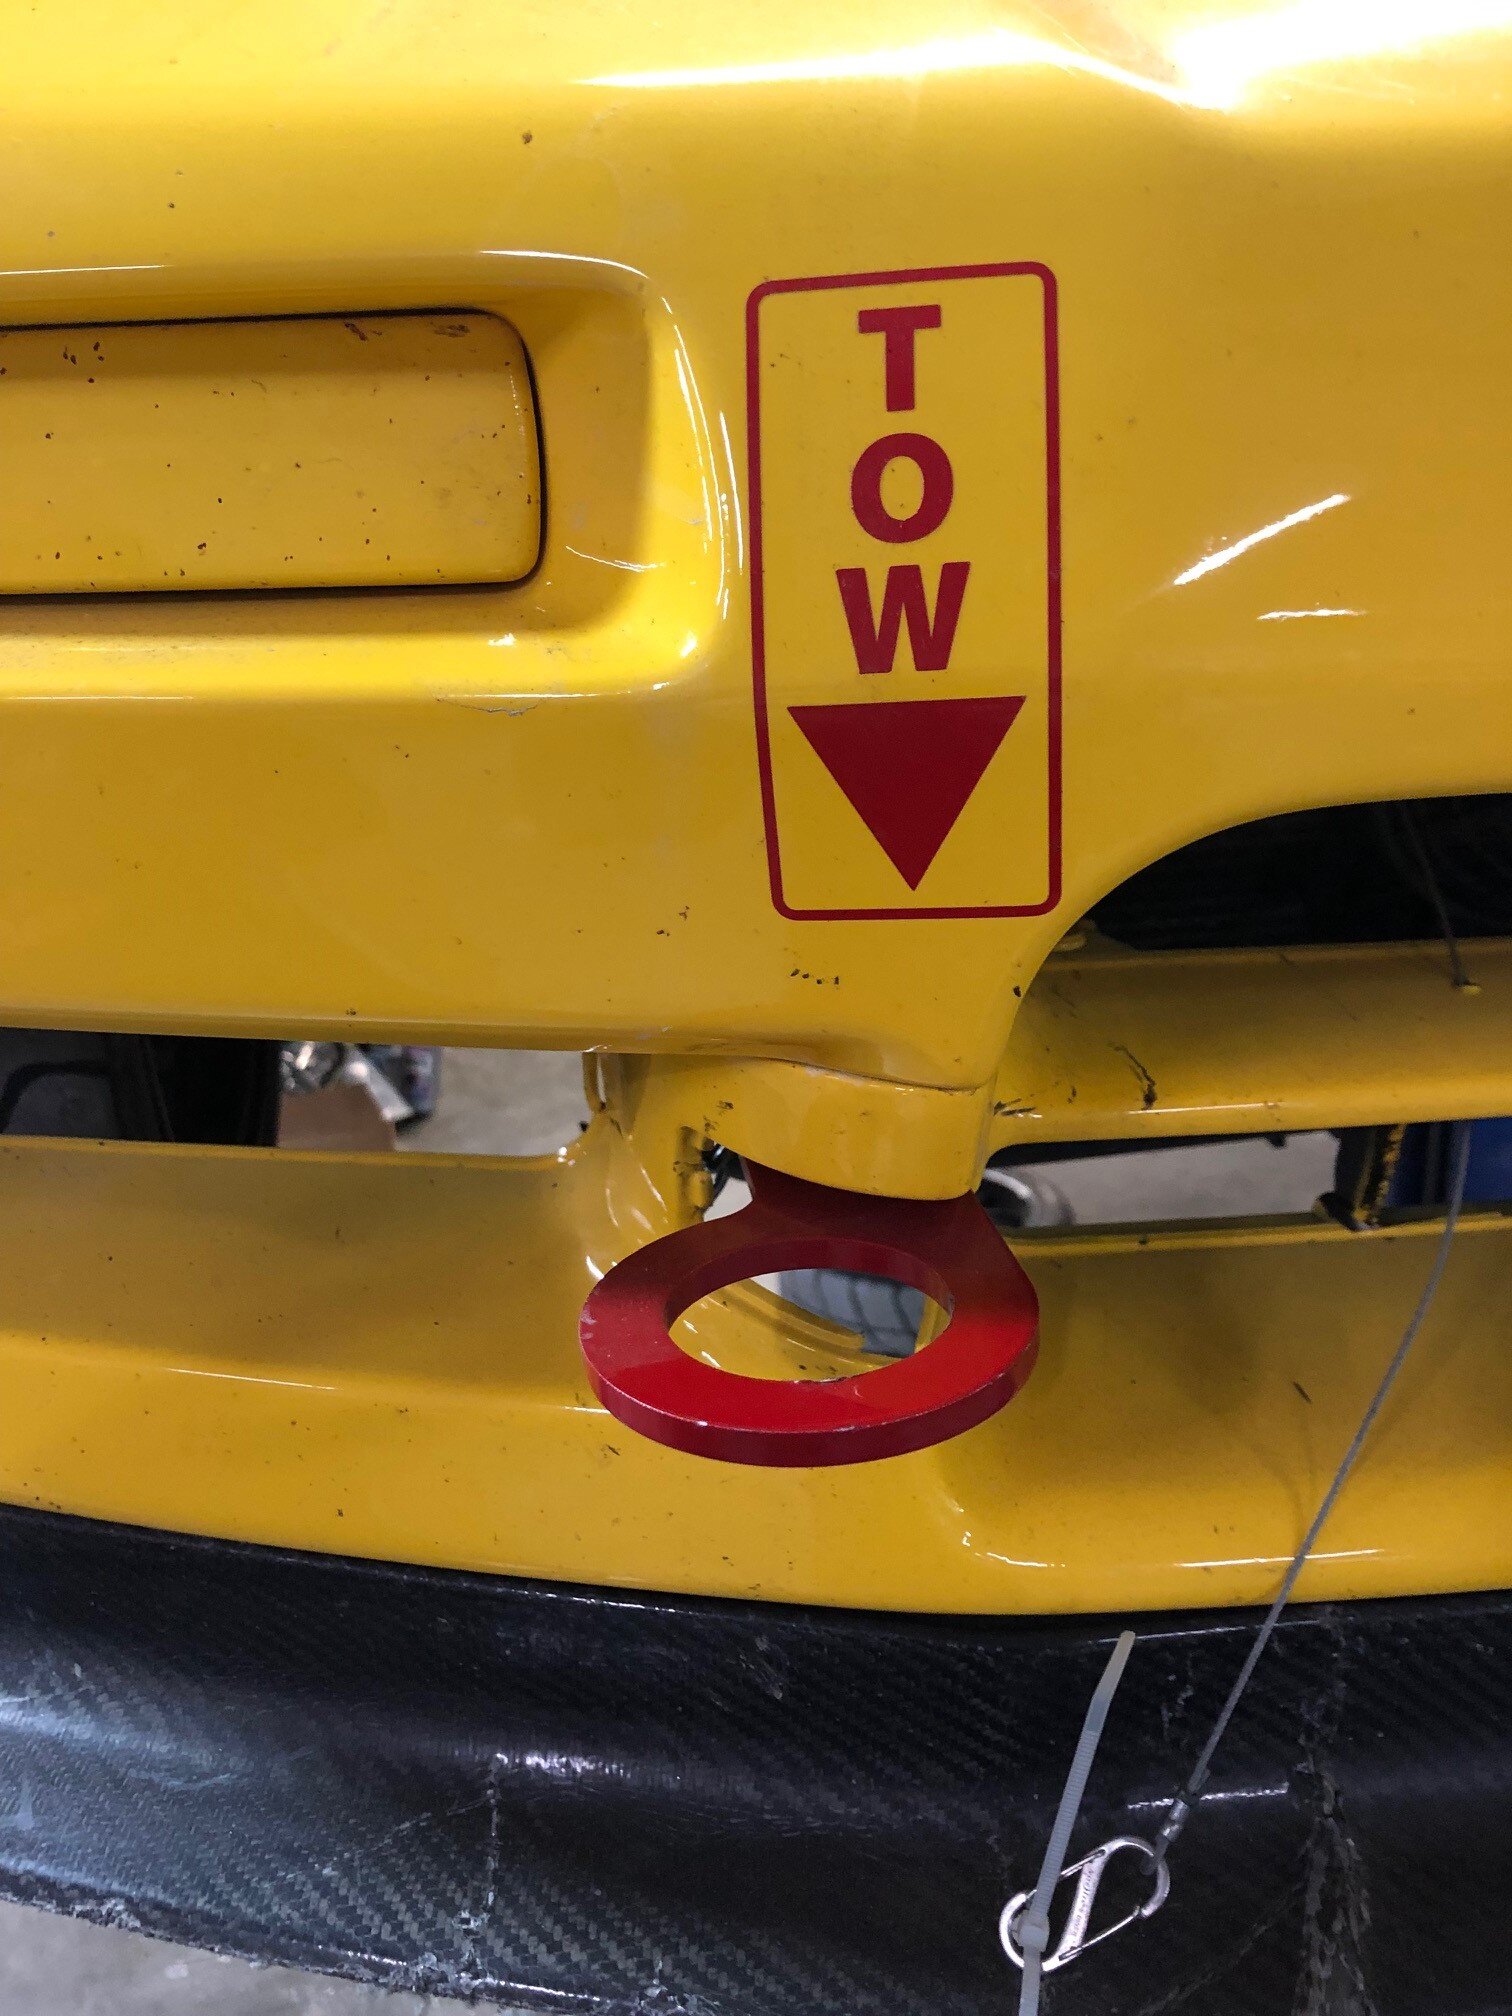 CedarRidgeFabrication Rear tow hook RED steel NSX Honda Acura race track 